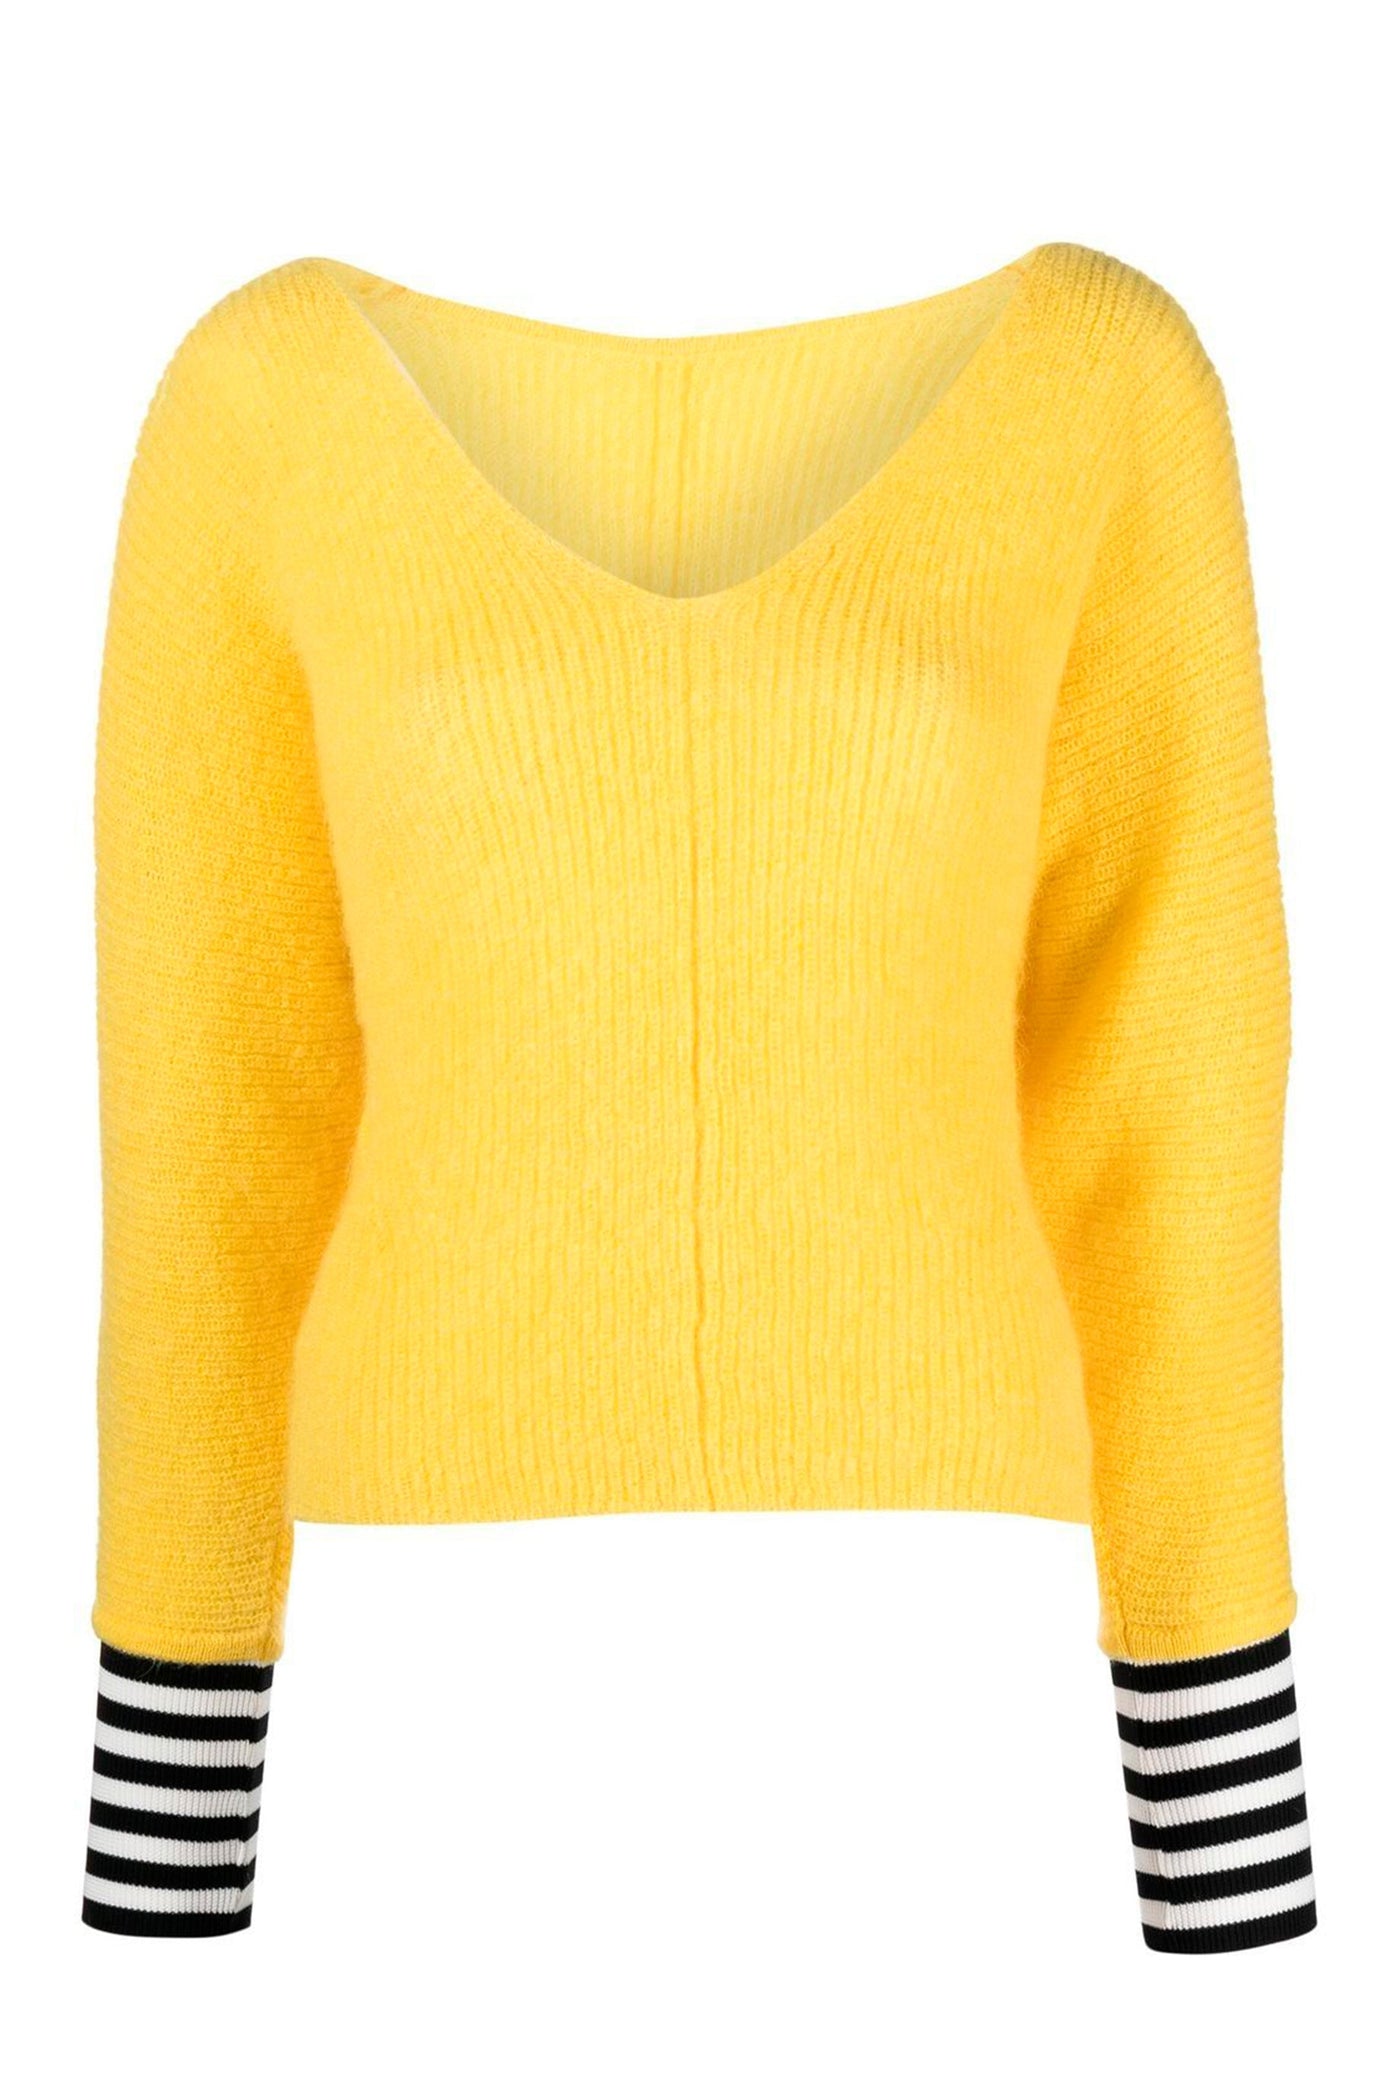 Essentiel Antwerp Cotonou Knit - Yellow